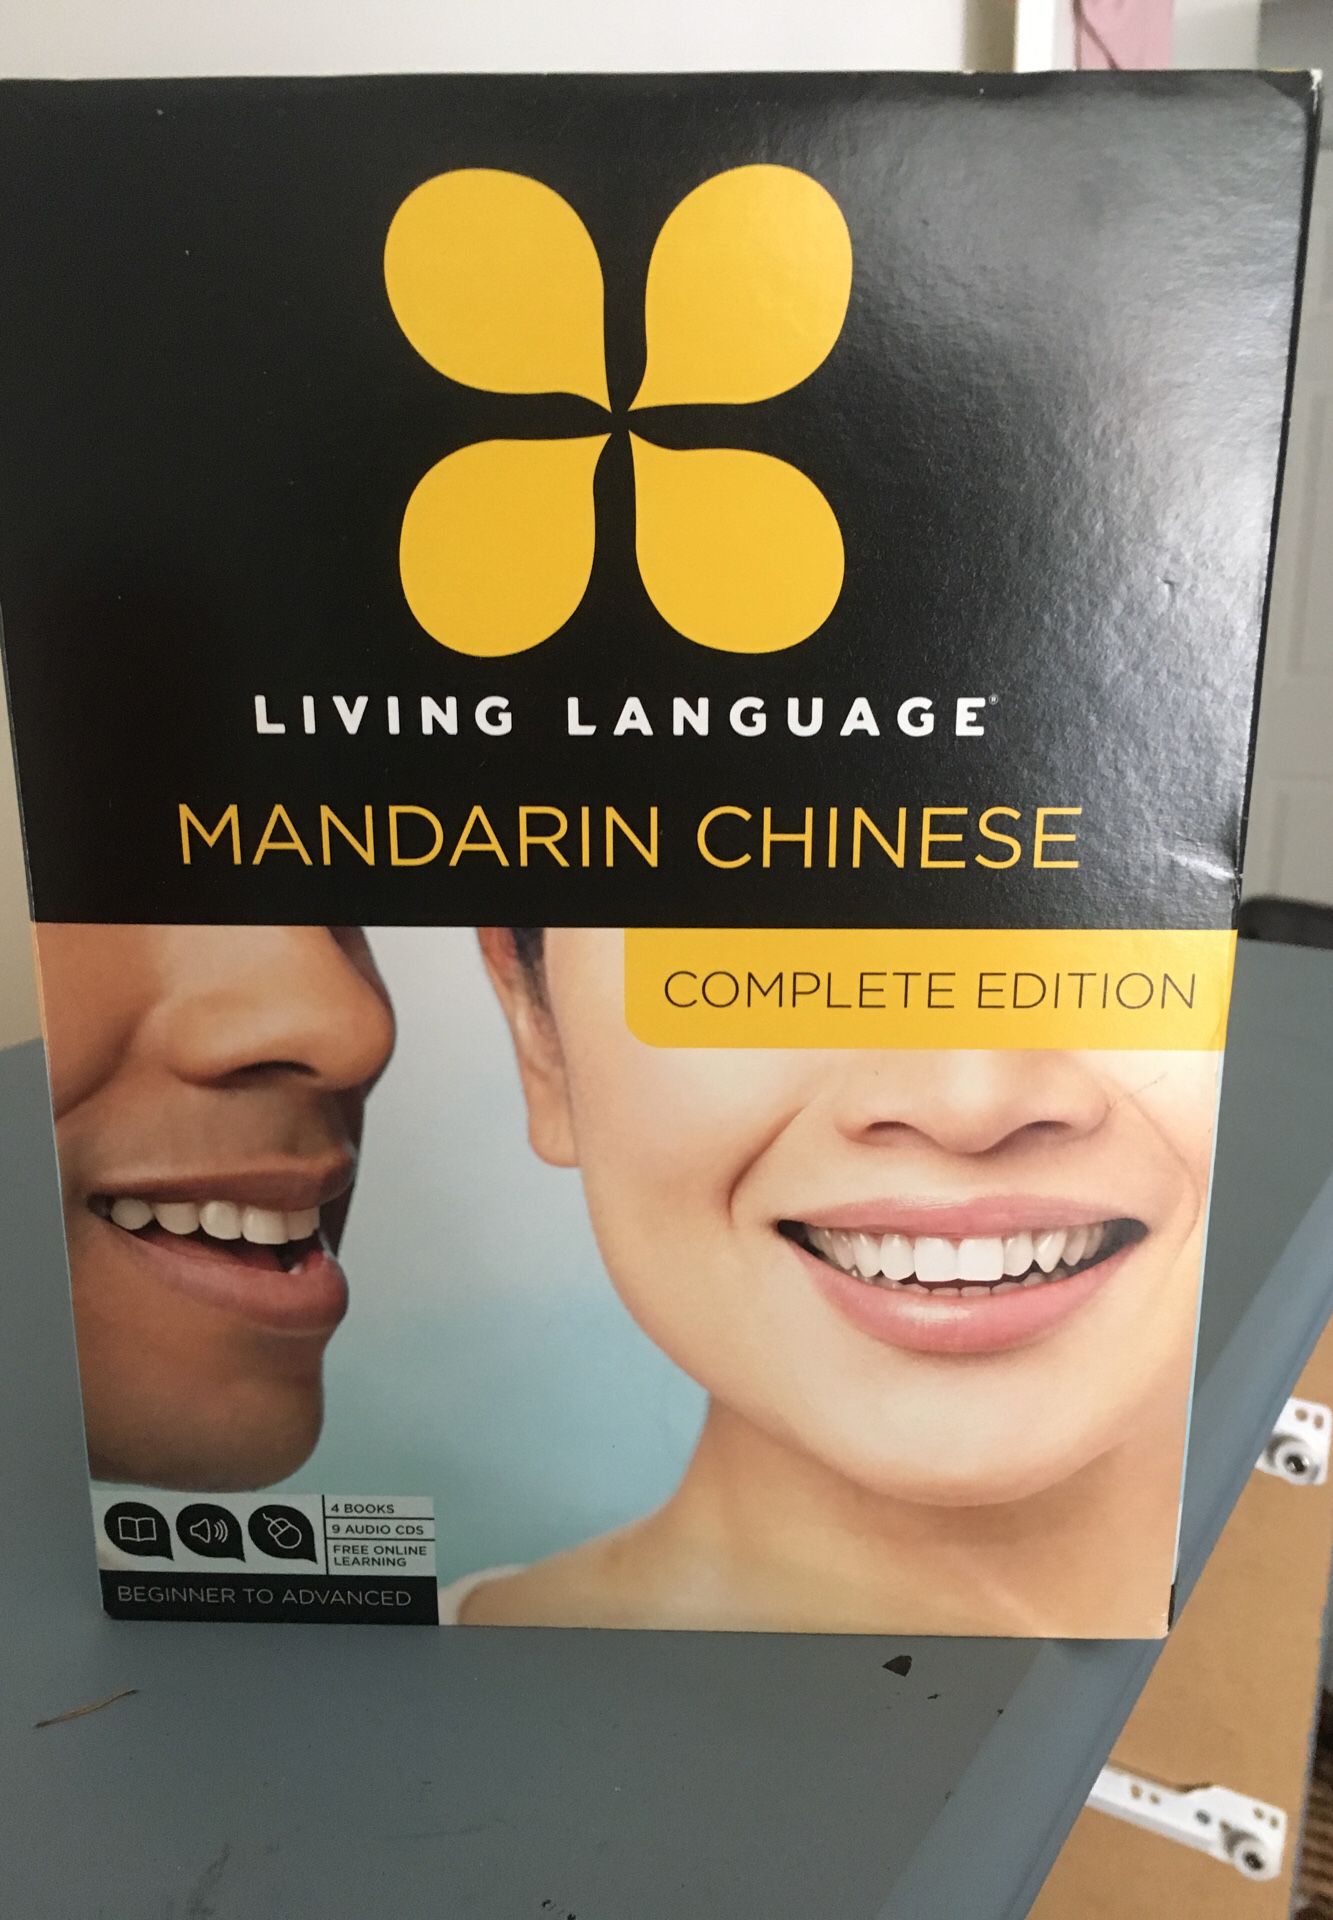 Mandarin Chinese language learning